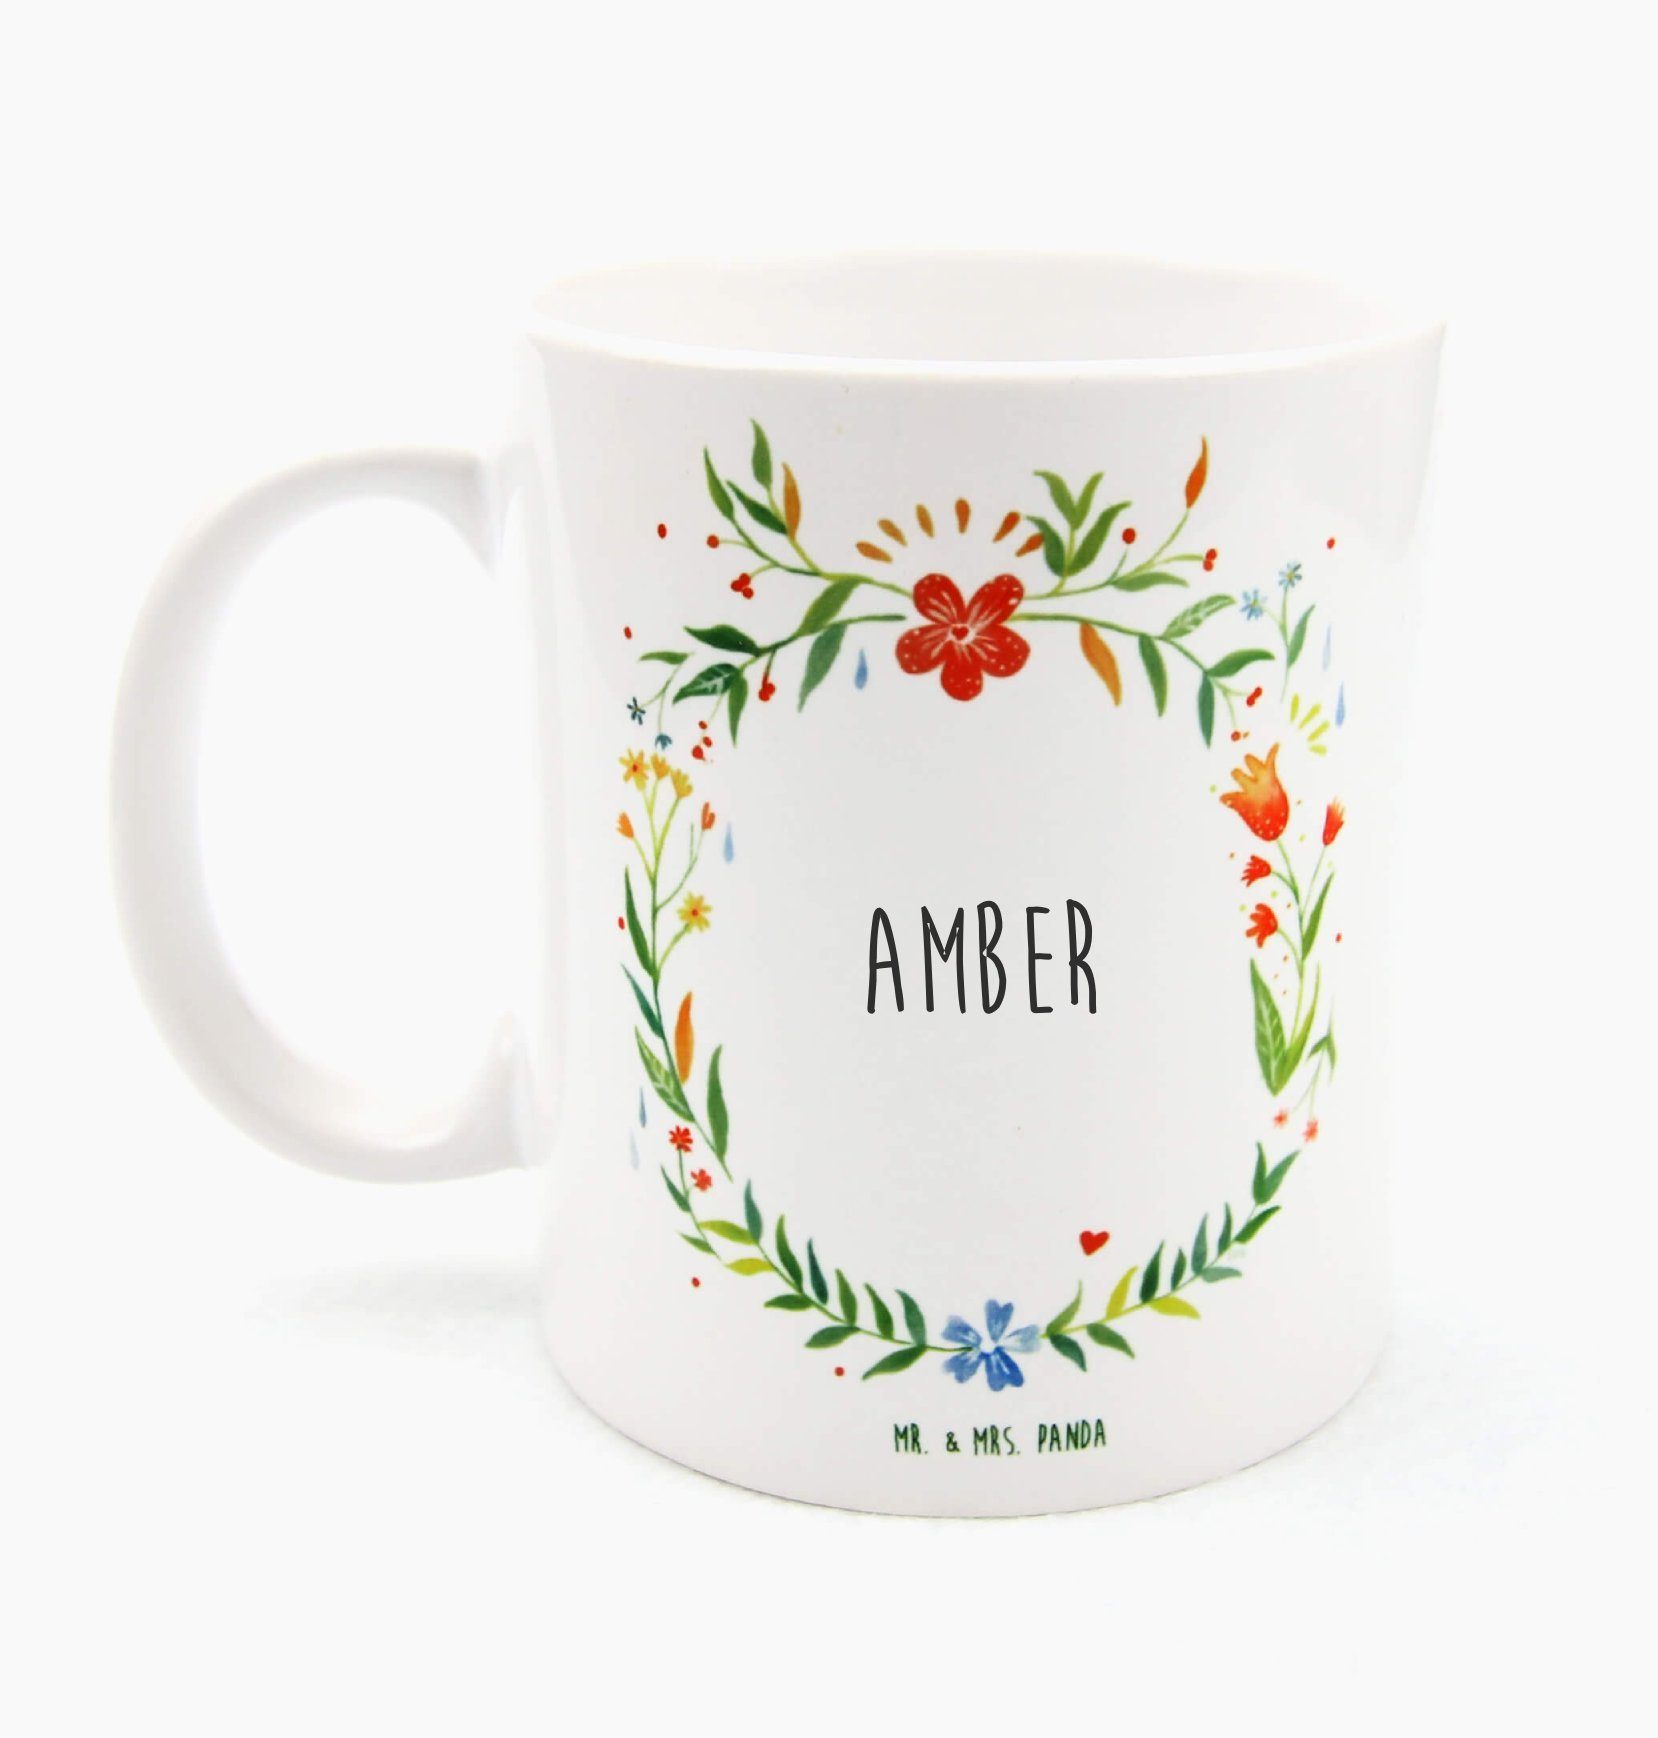 Mr. & Mrs. Panda Tasse Amber - Geschenk, Geschenk Tasse, Kaffeebecher, Teetasse, Porzellanta, Keramik